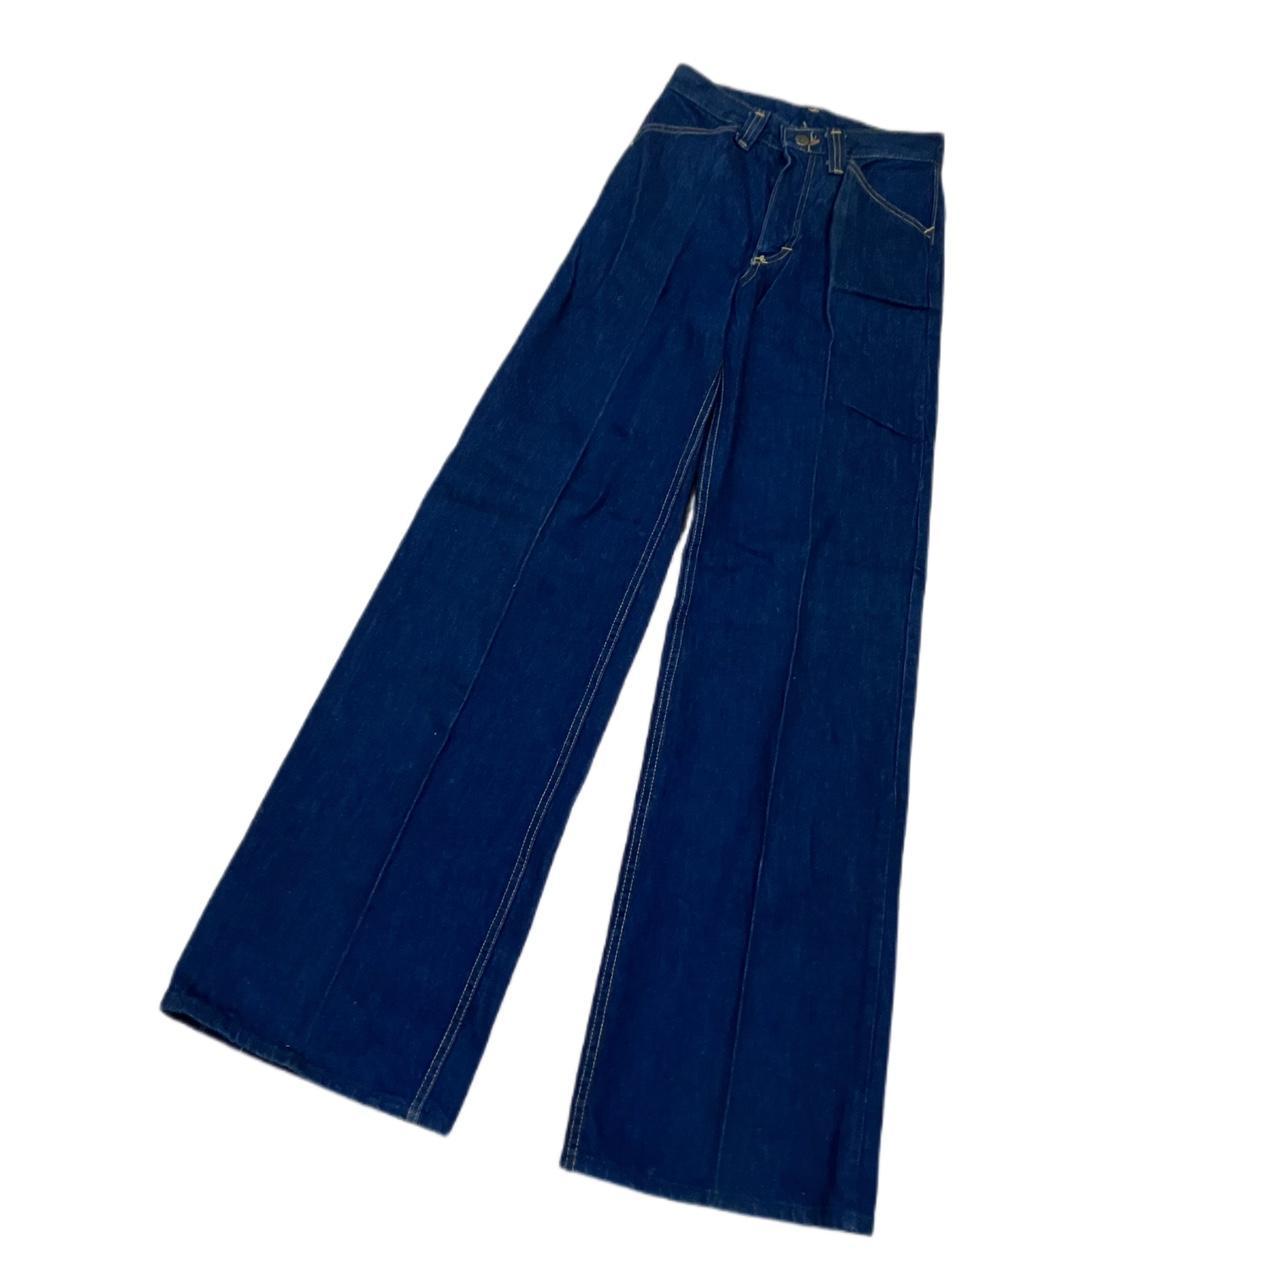 True vintage 1970s BNWT Lee jeans High rise 70s... - Depop